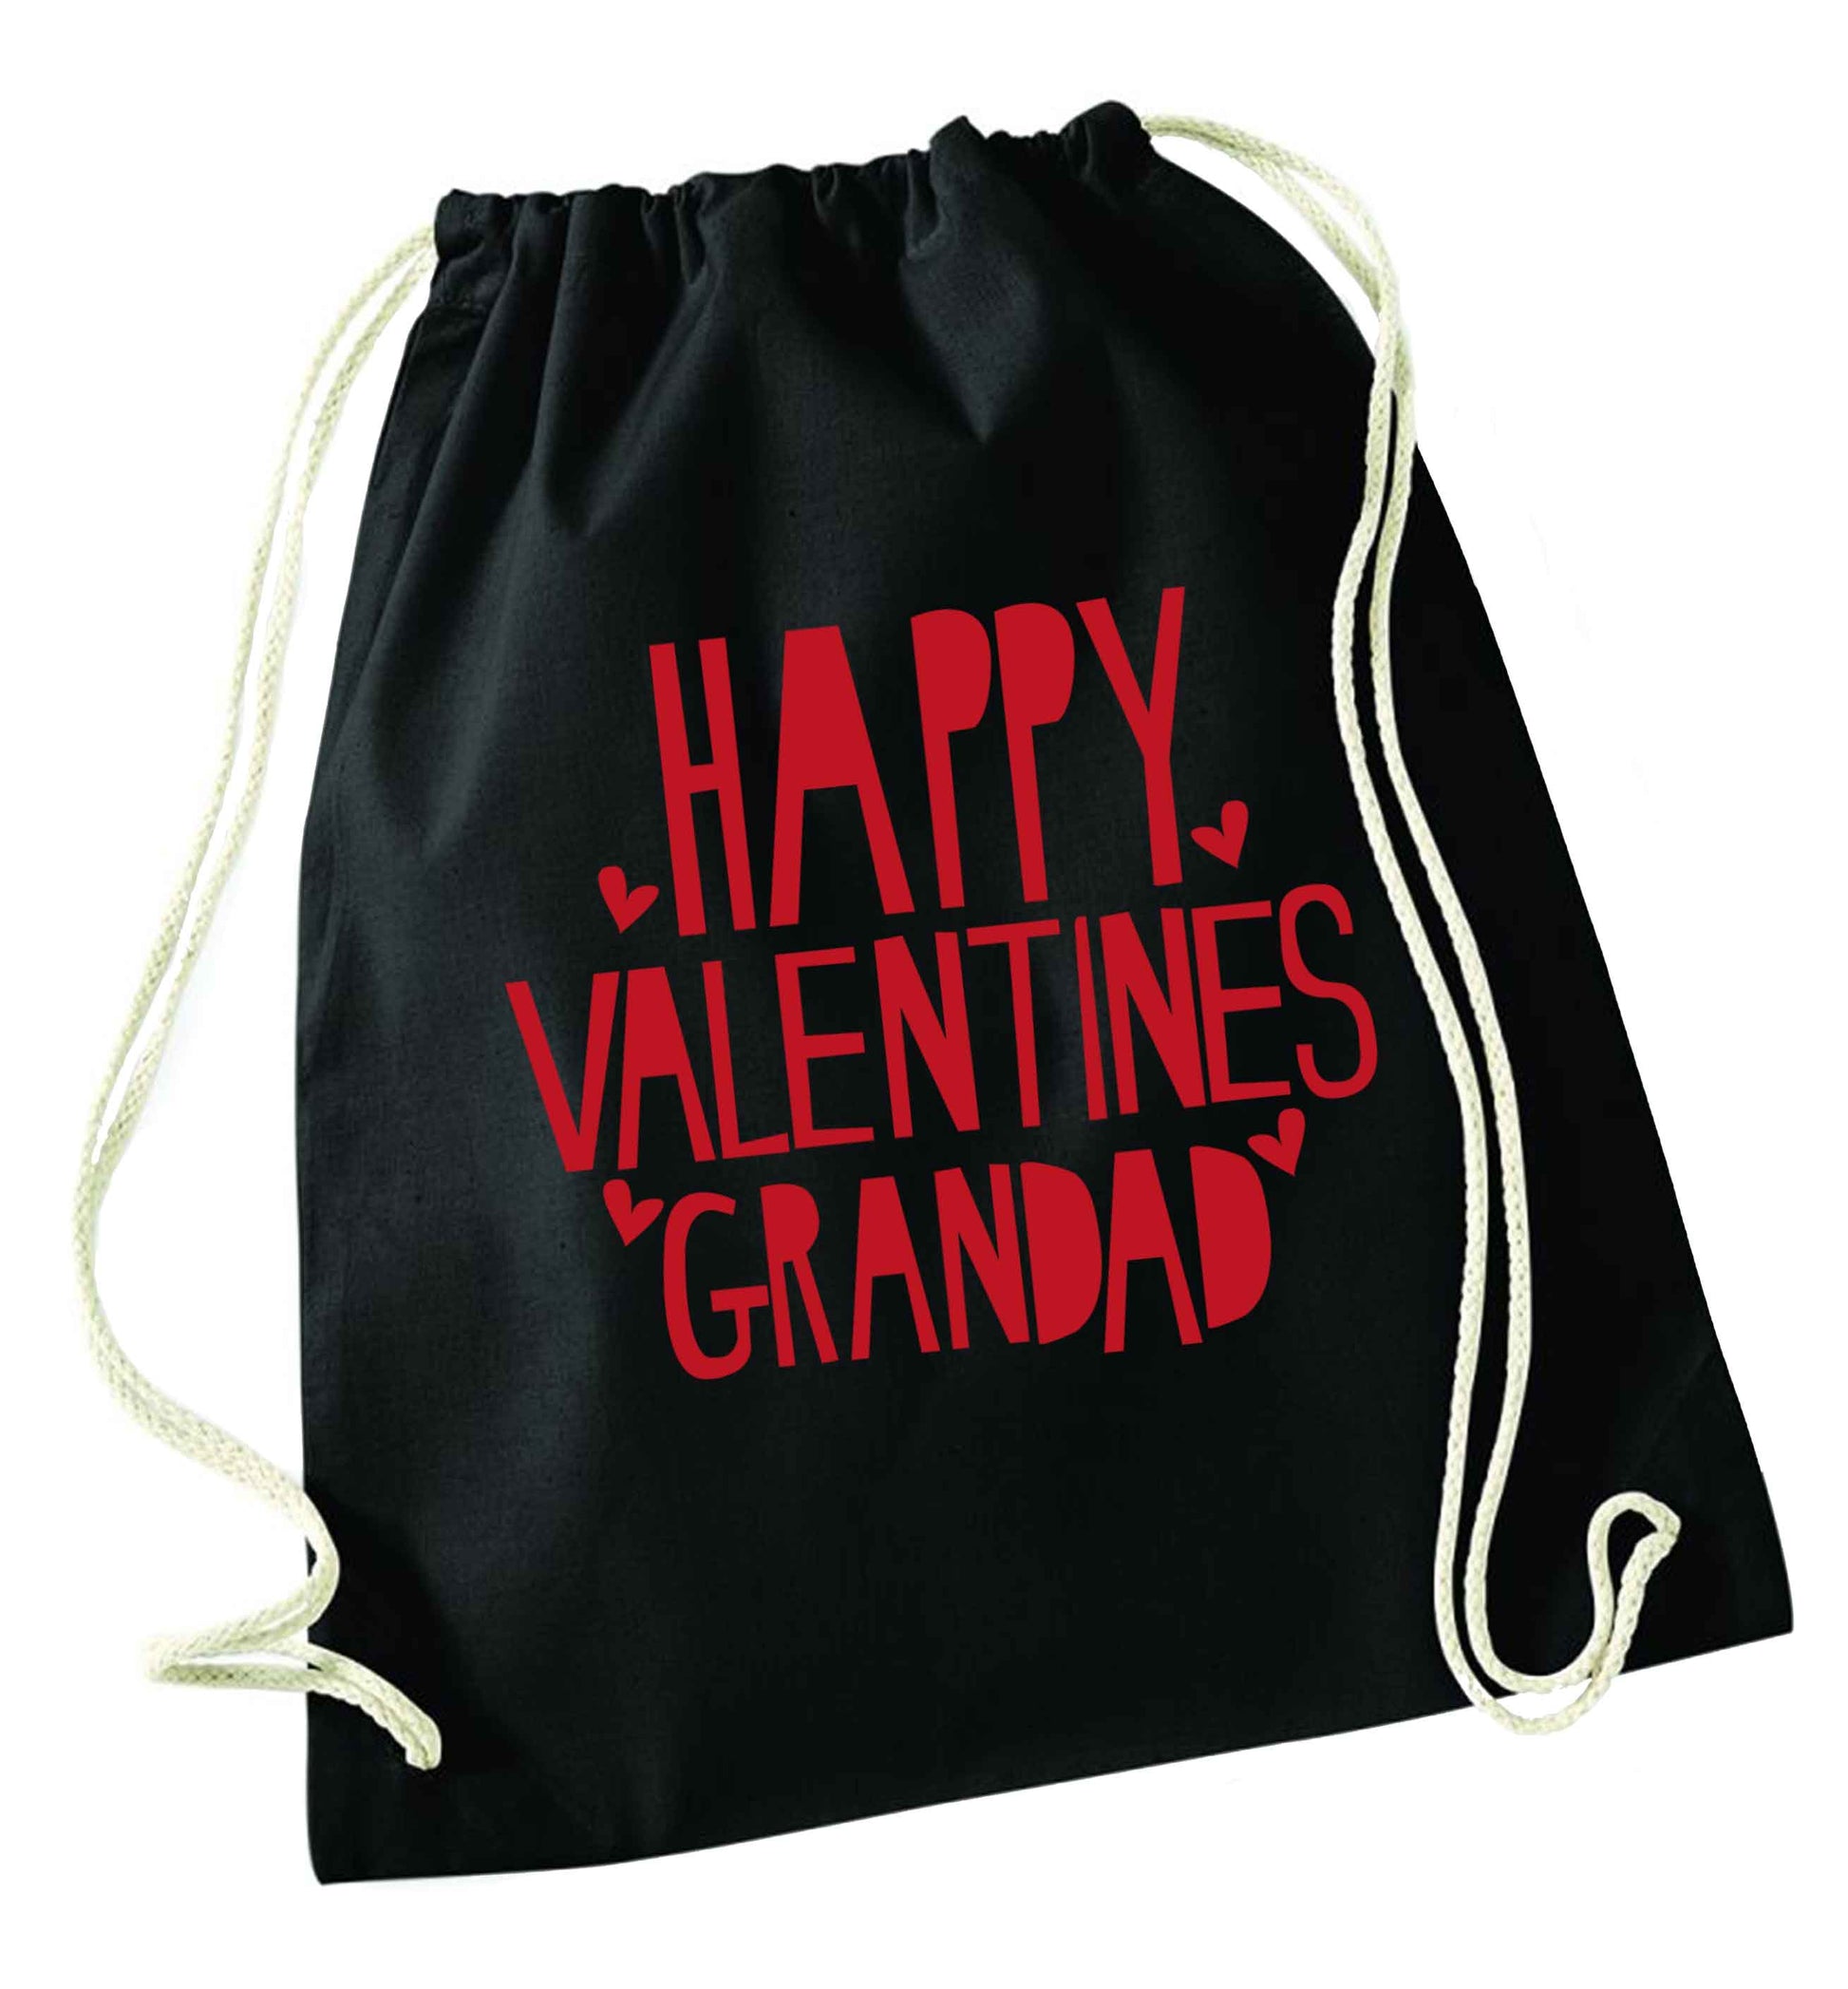 Happy valentines grandad black drawstring bag